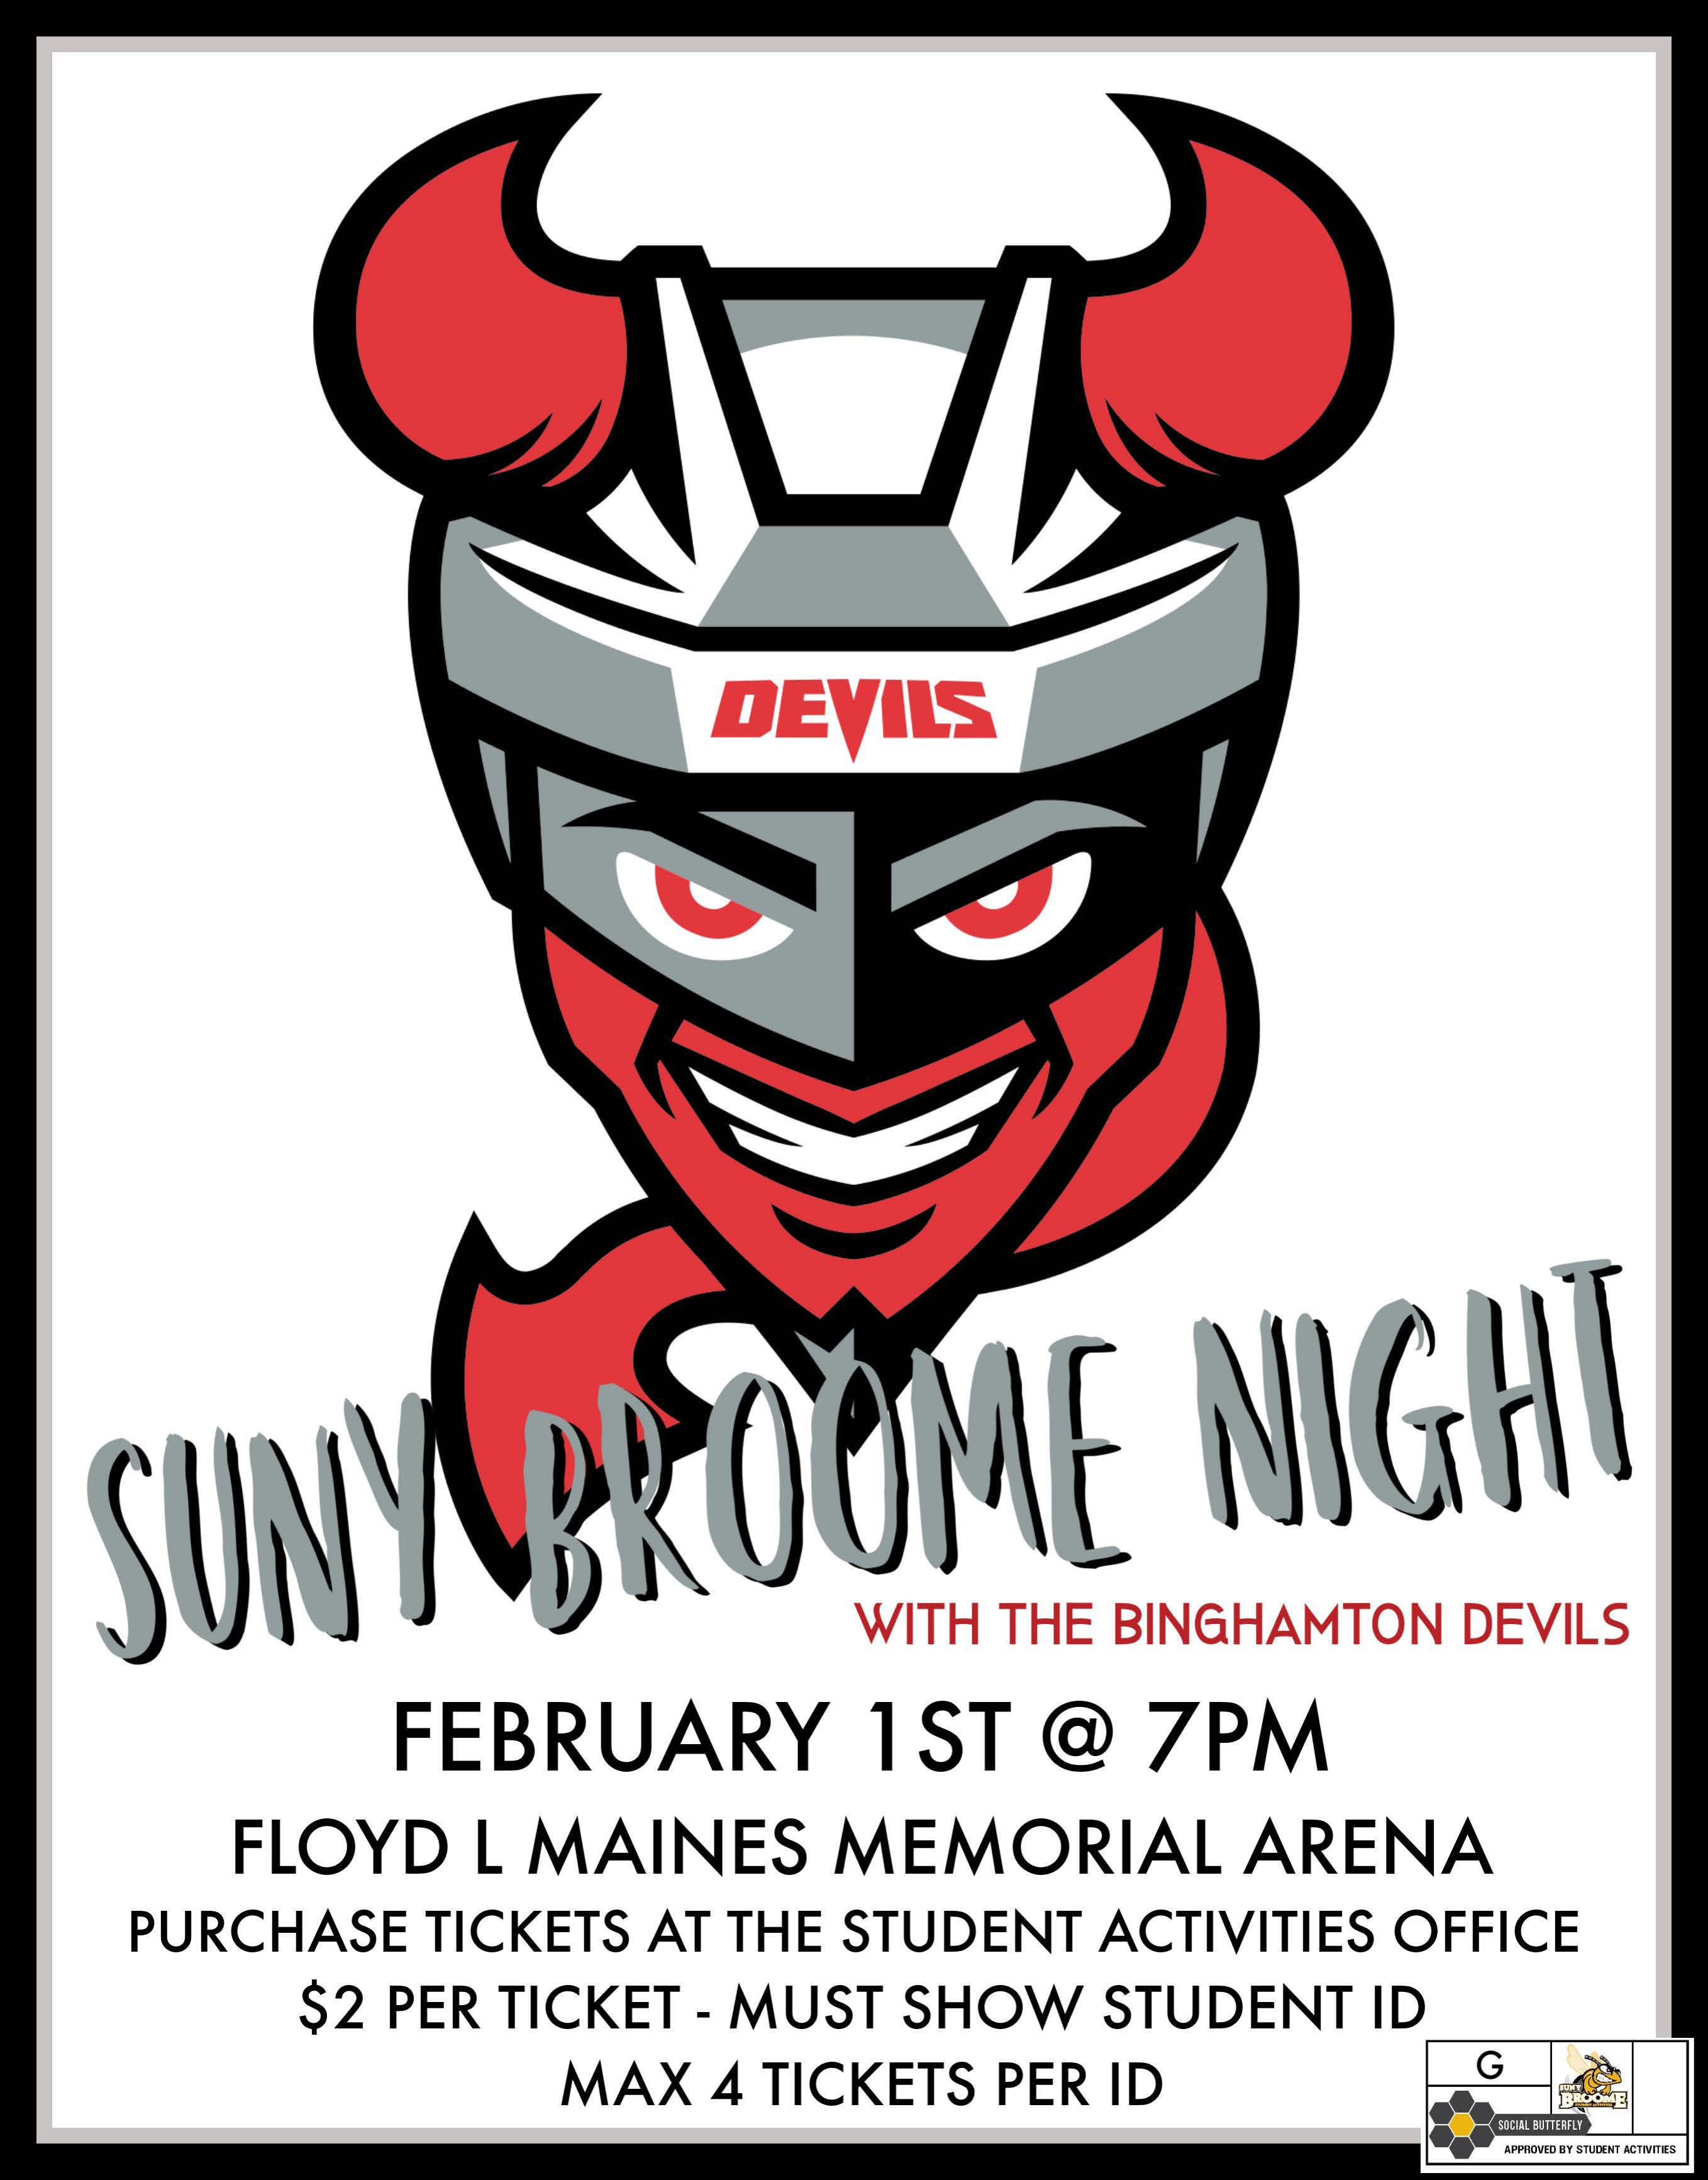 SUNY Broome Night at Binghamton Devils on Feb. 1